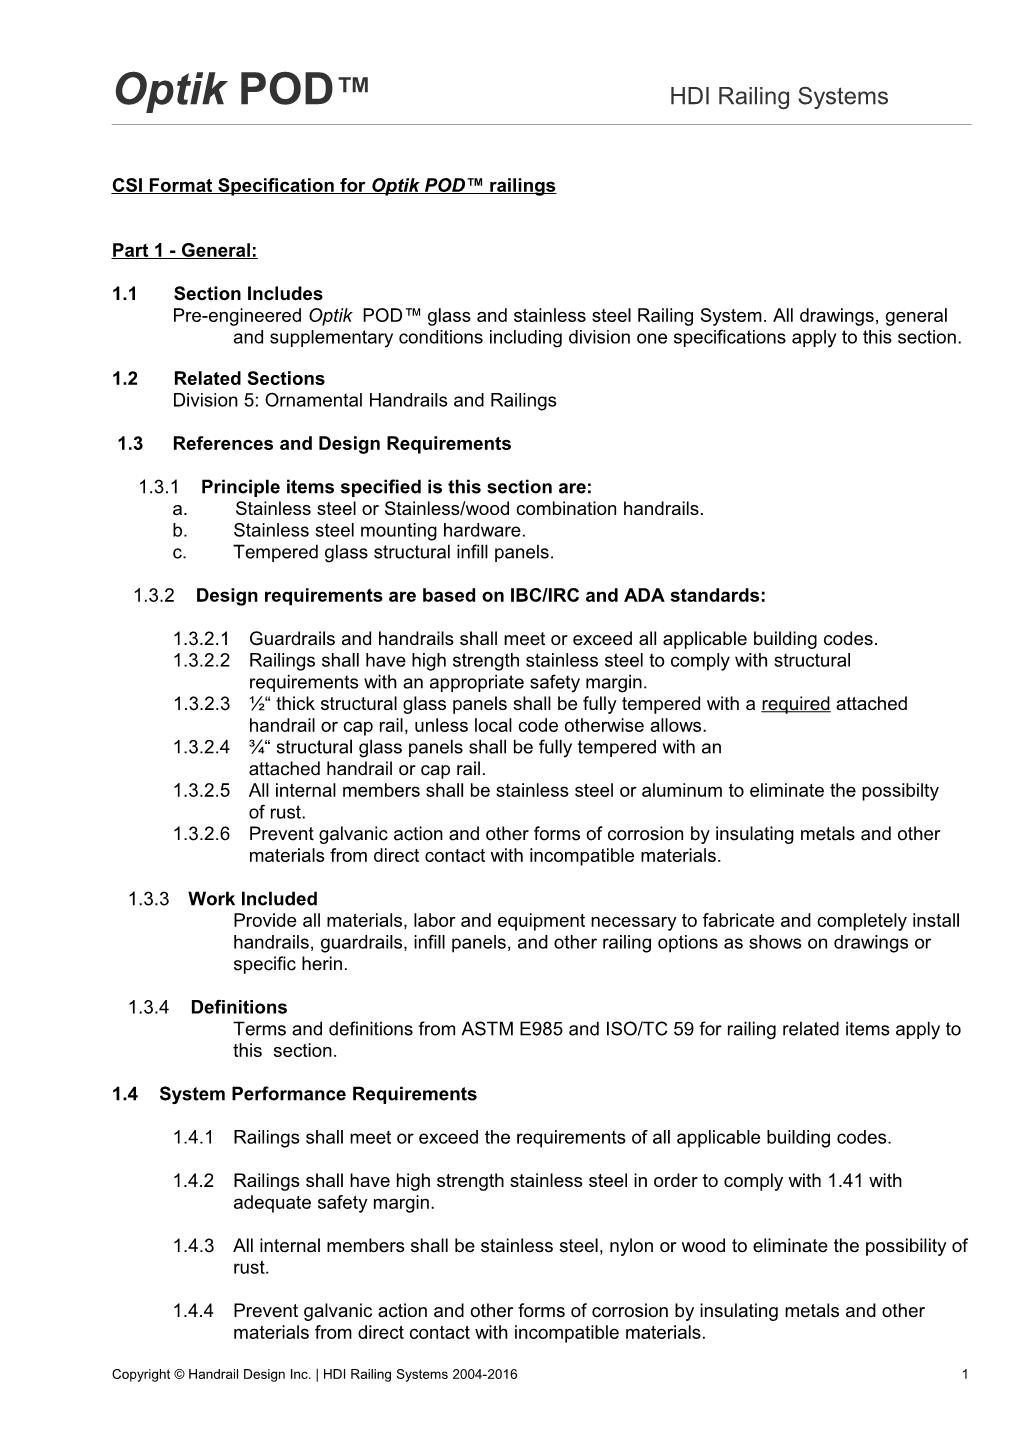 CSI Format Specification for Optik POD Railings